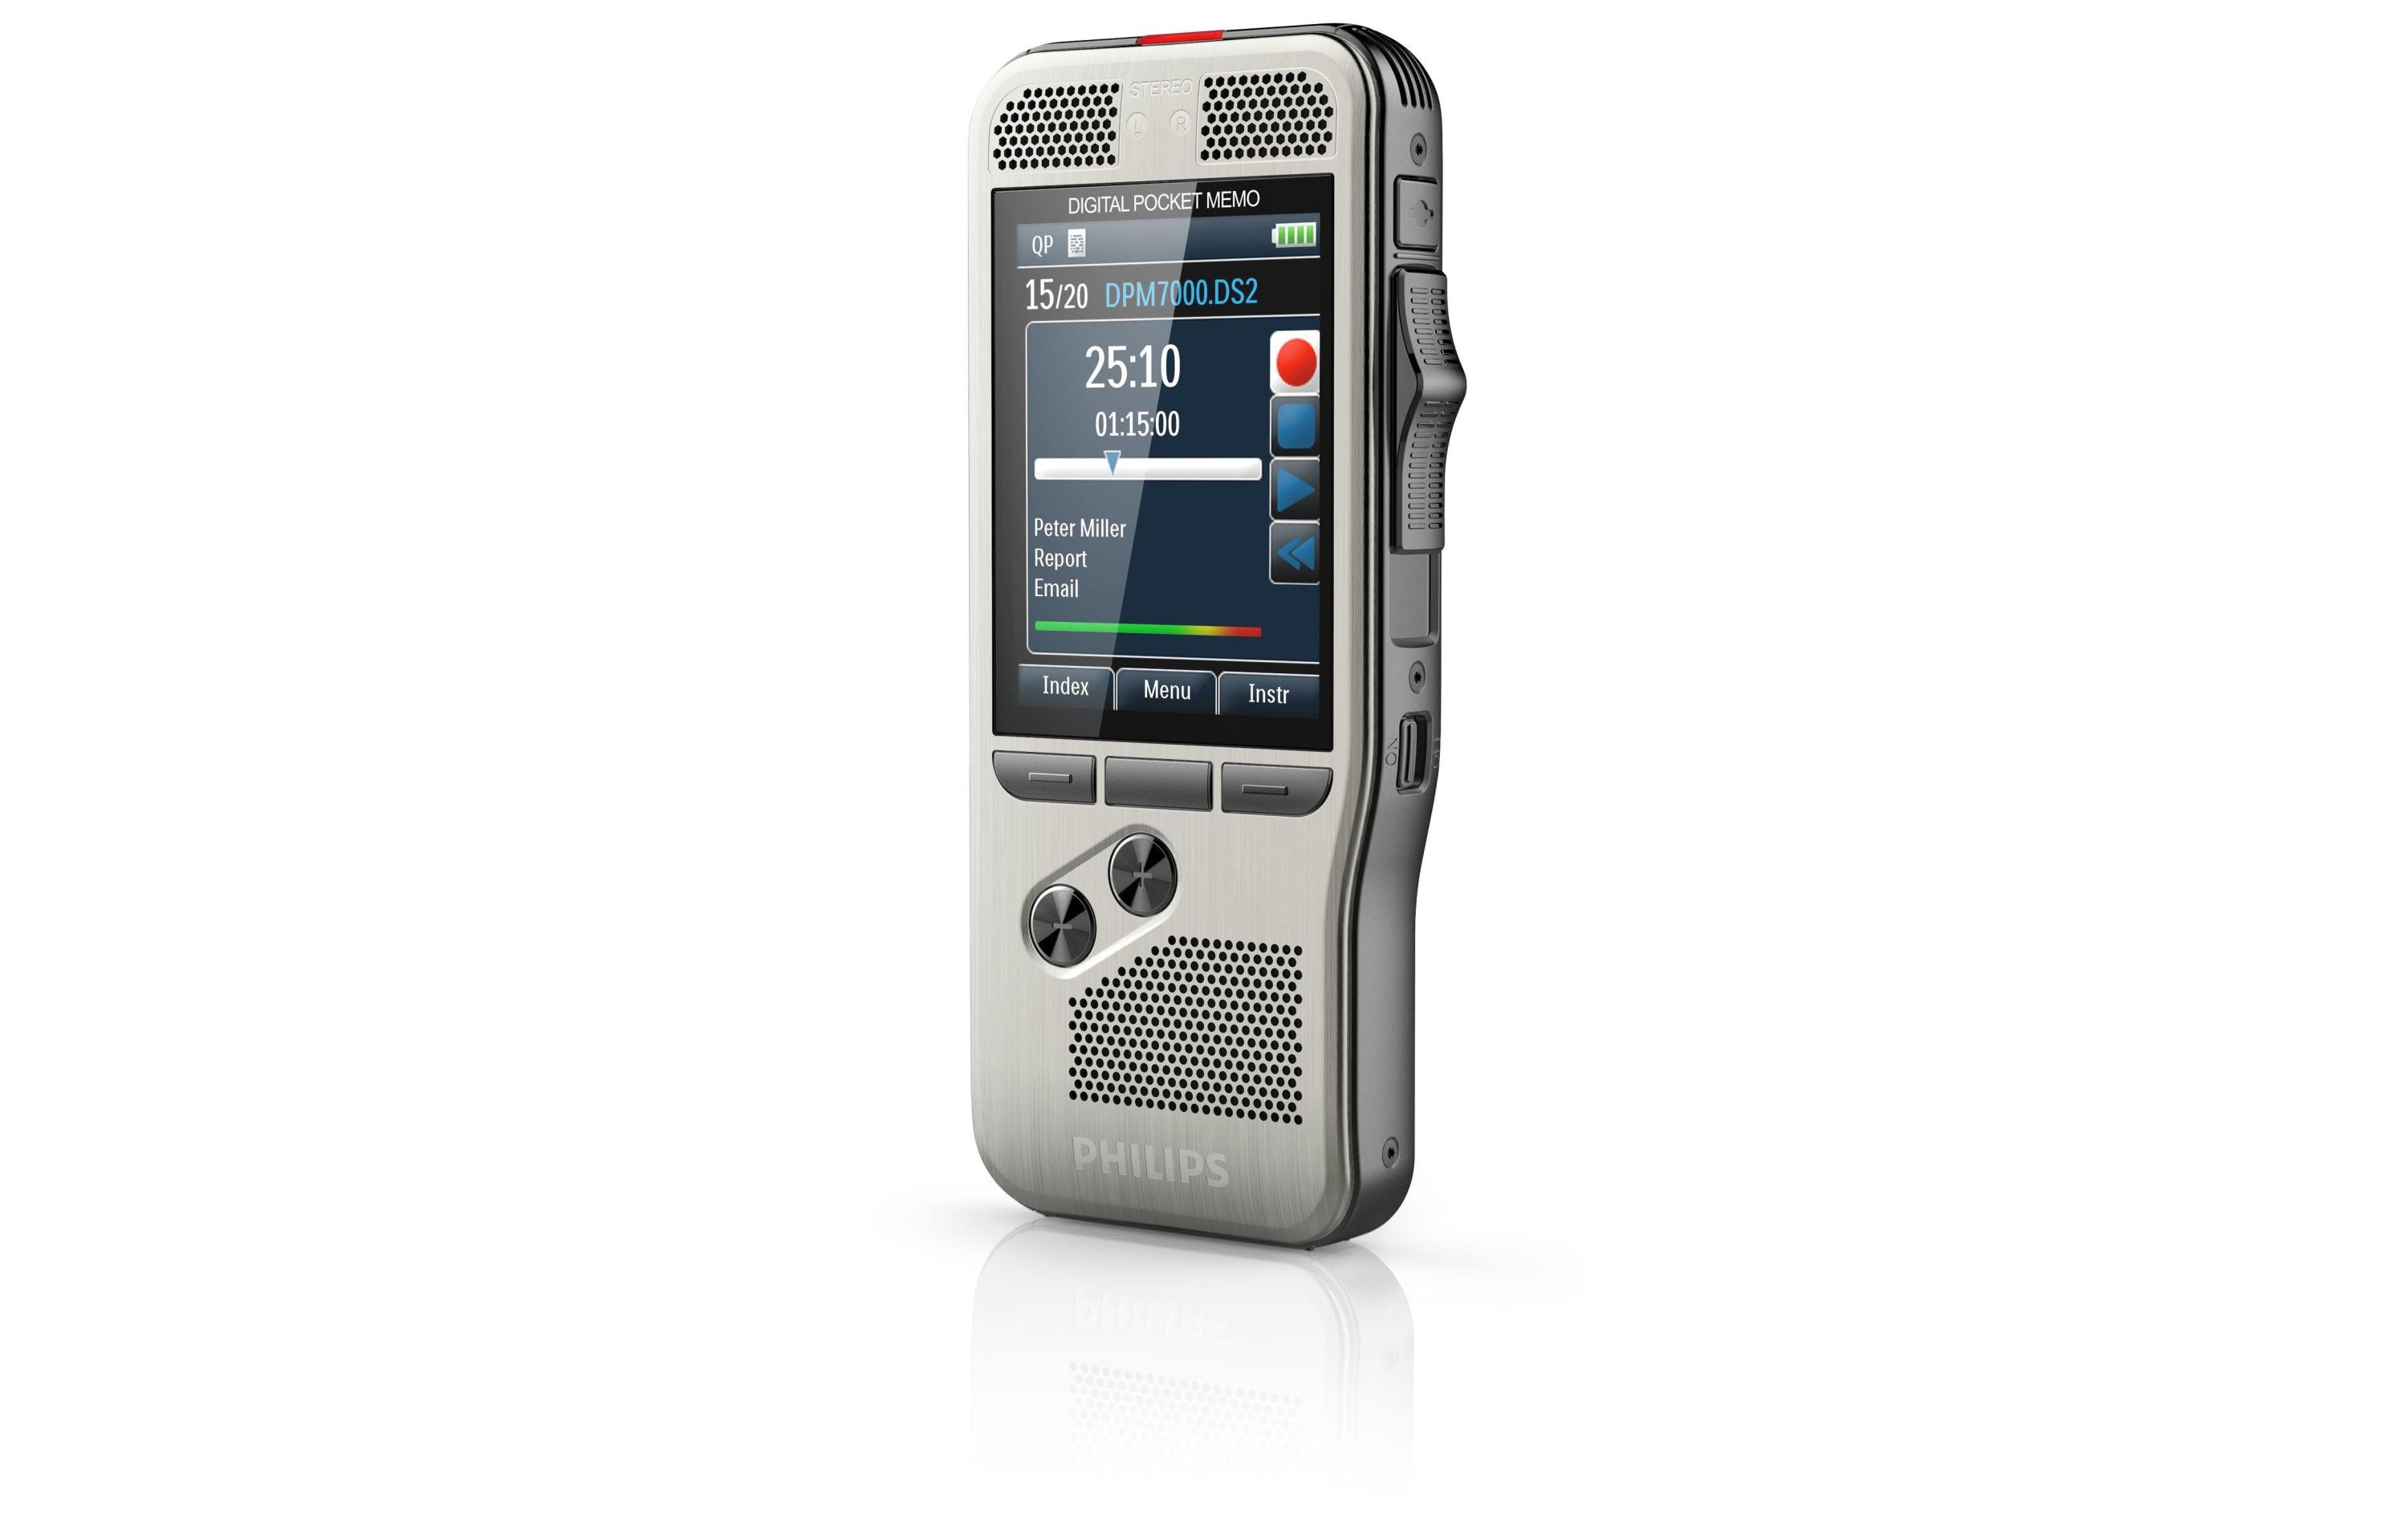 Philips Diktiergerät Digital Pocket Memo DPM7000